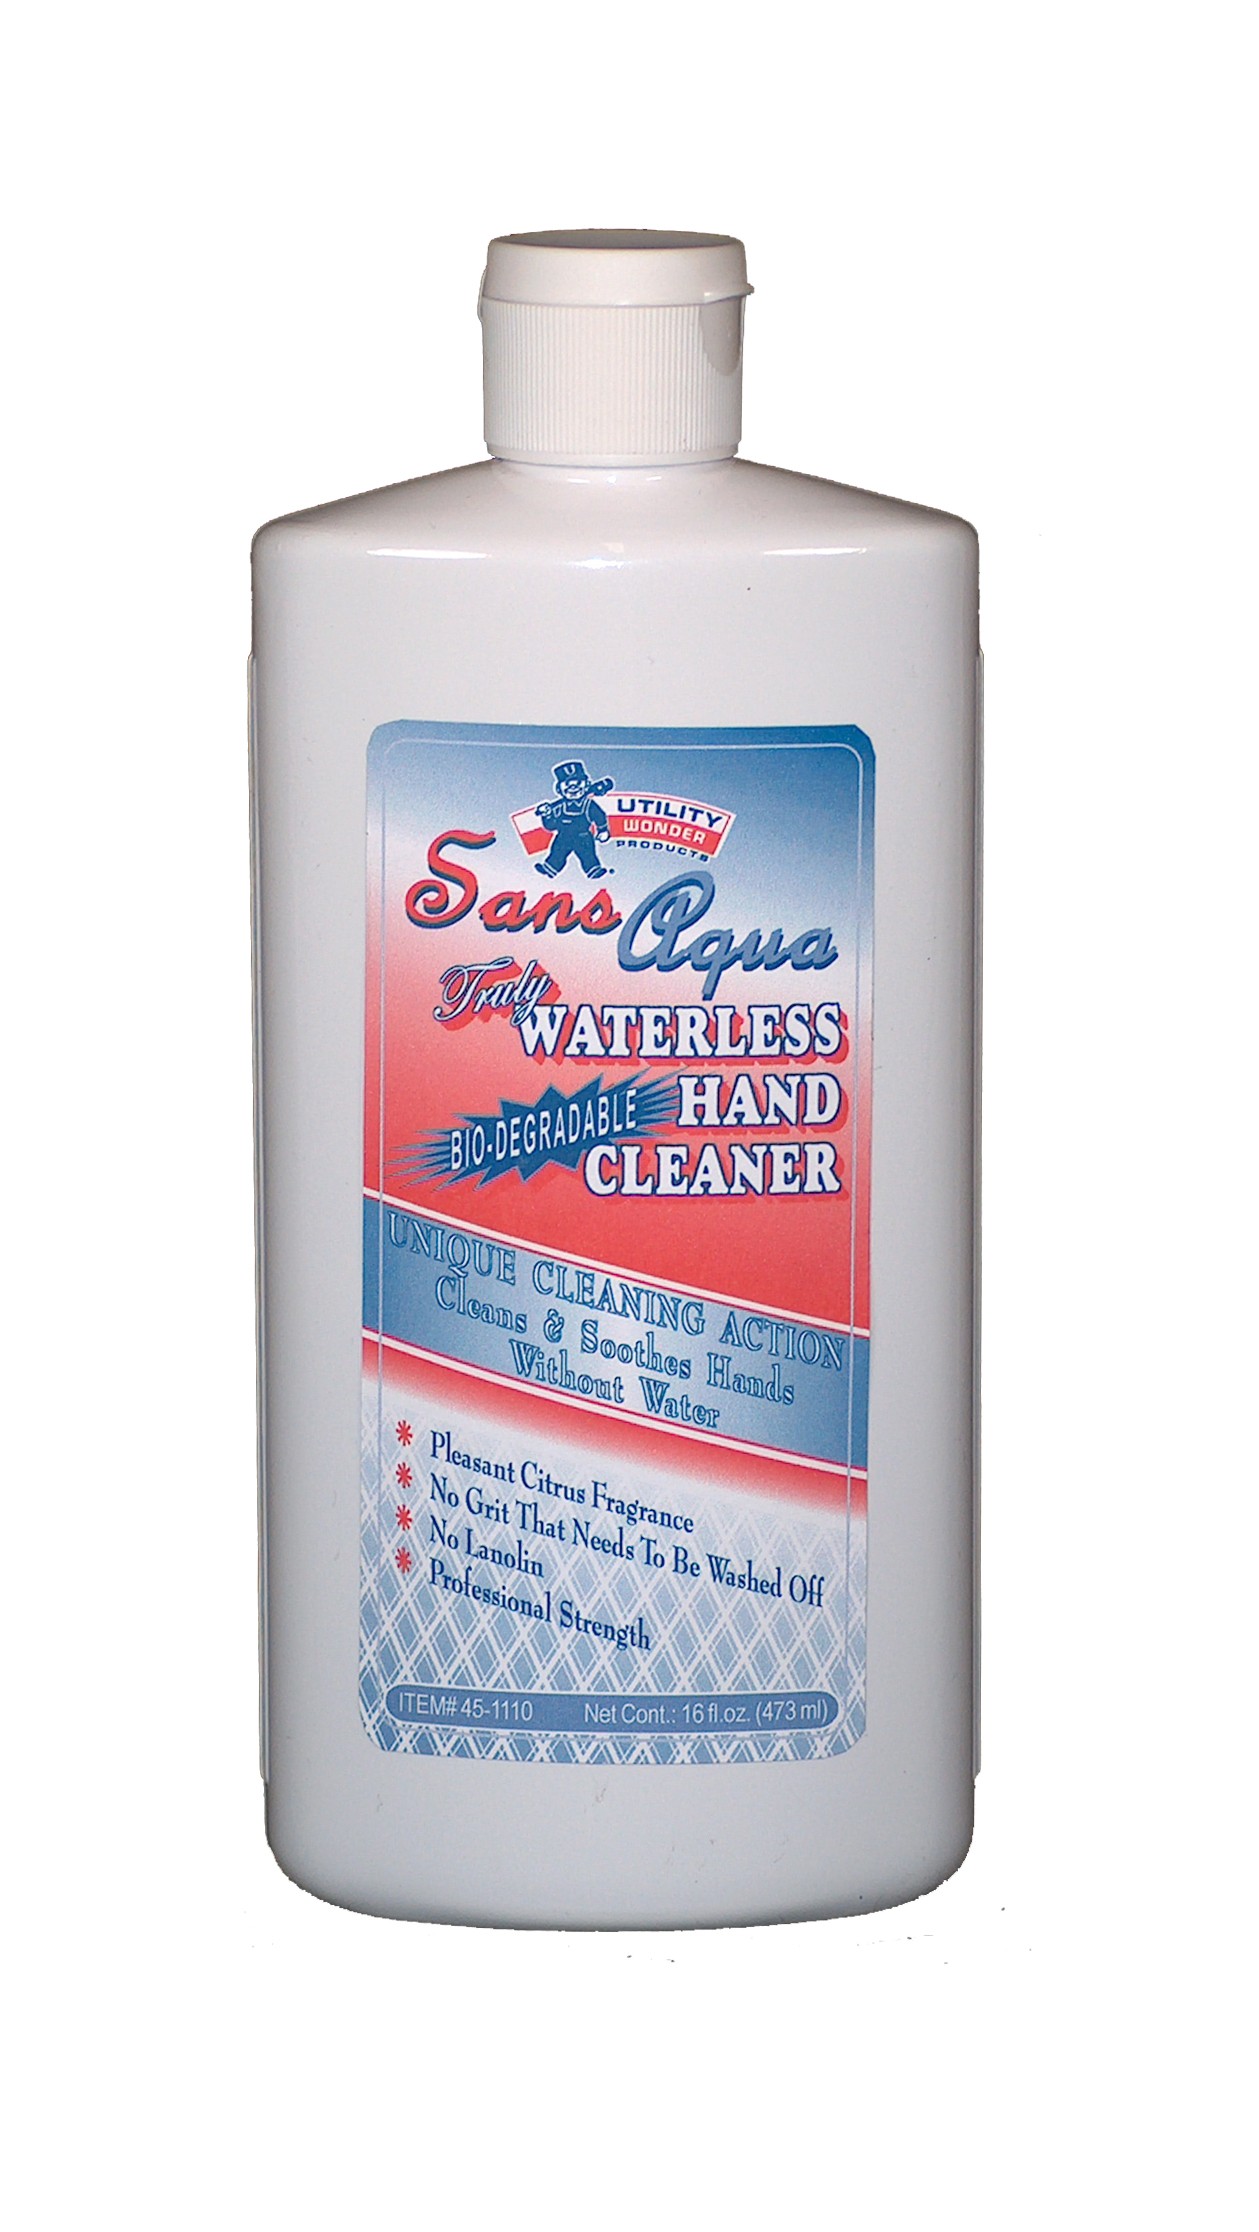 SANS AQUA BIO-DEGRADABLE WATERLESS HAND CLEANER - Products